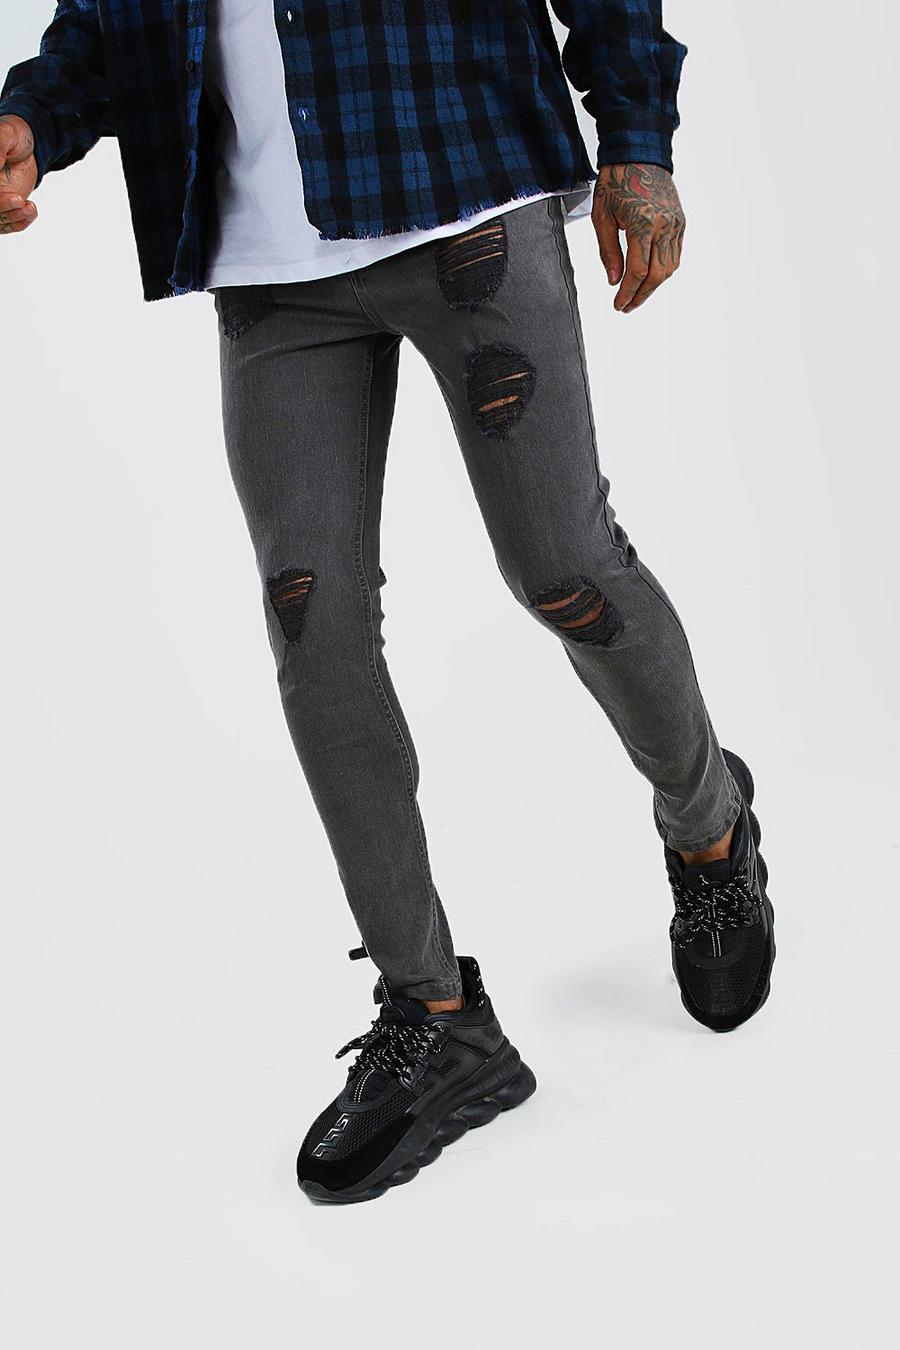 Charcoal grey Multi Rip Skinny Jeans